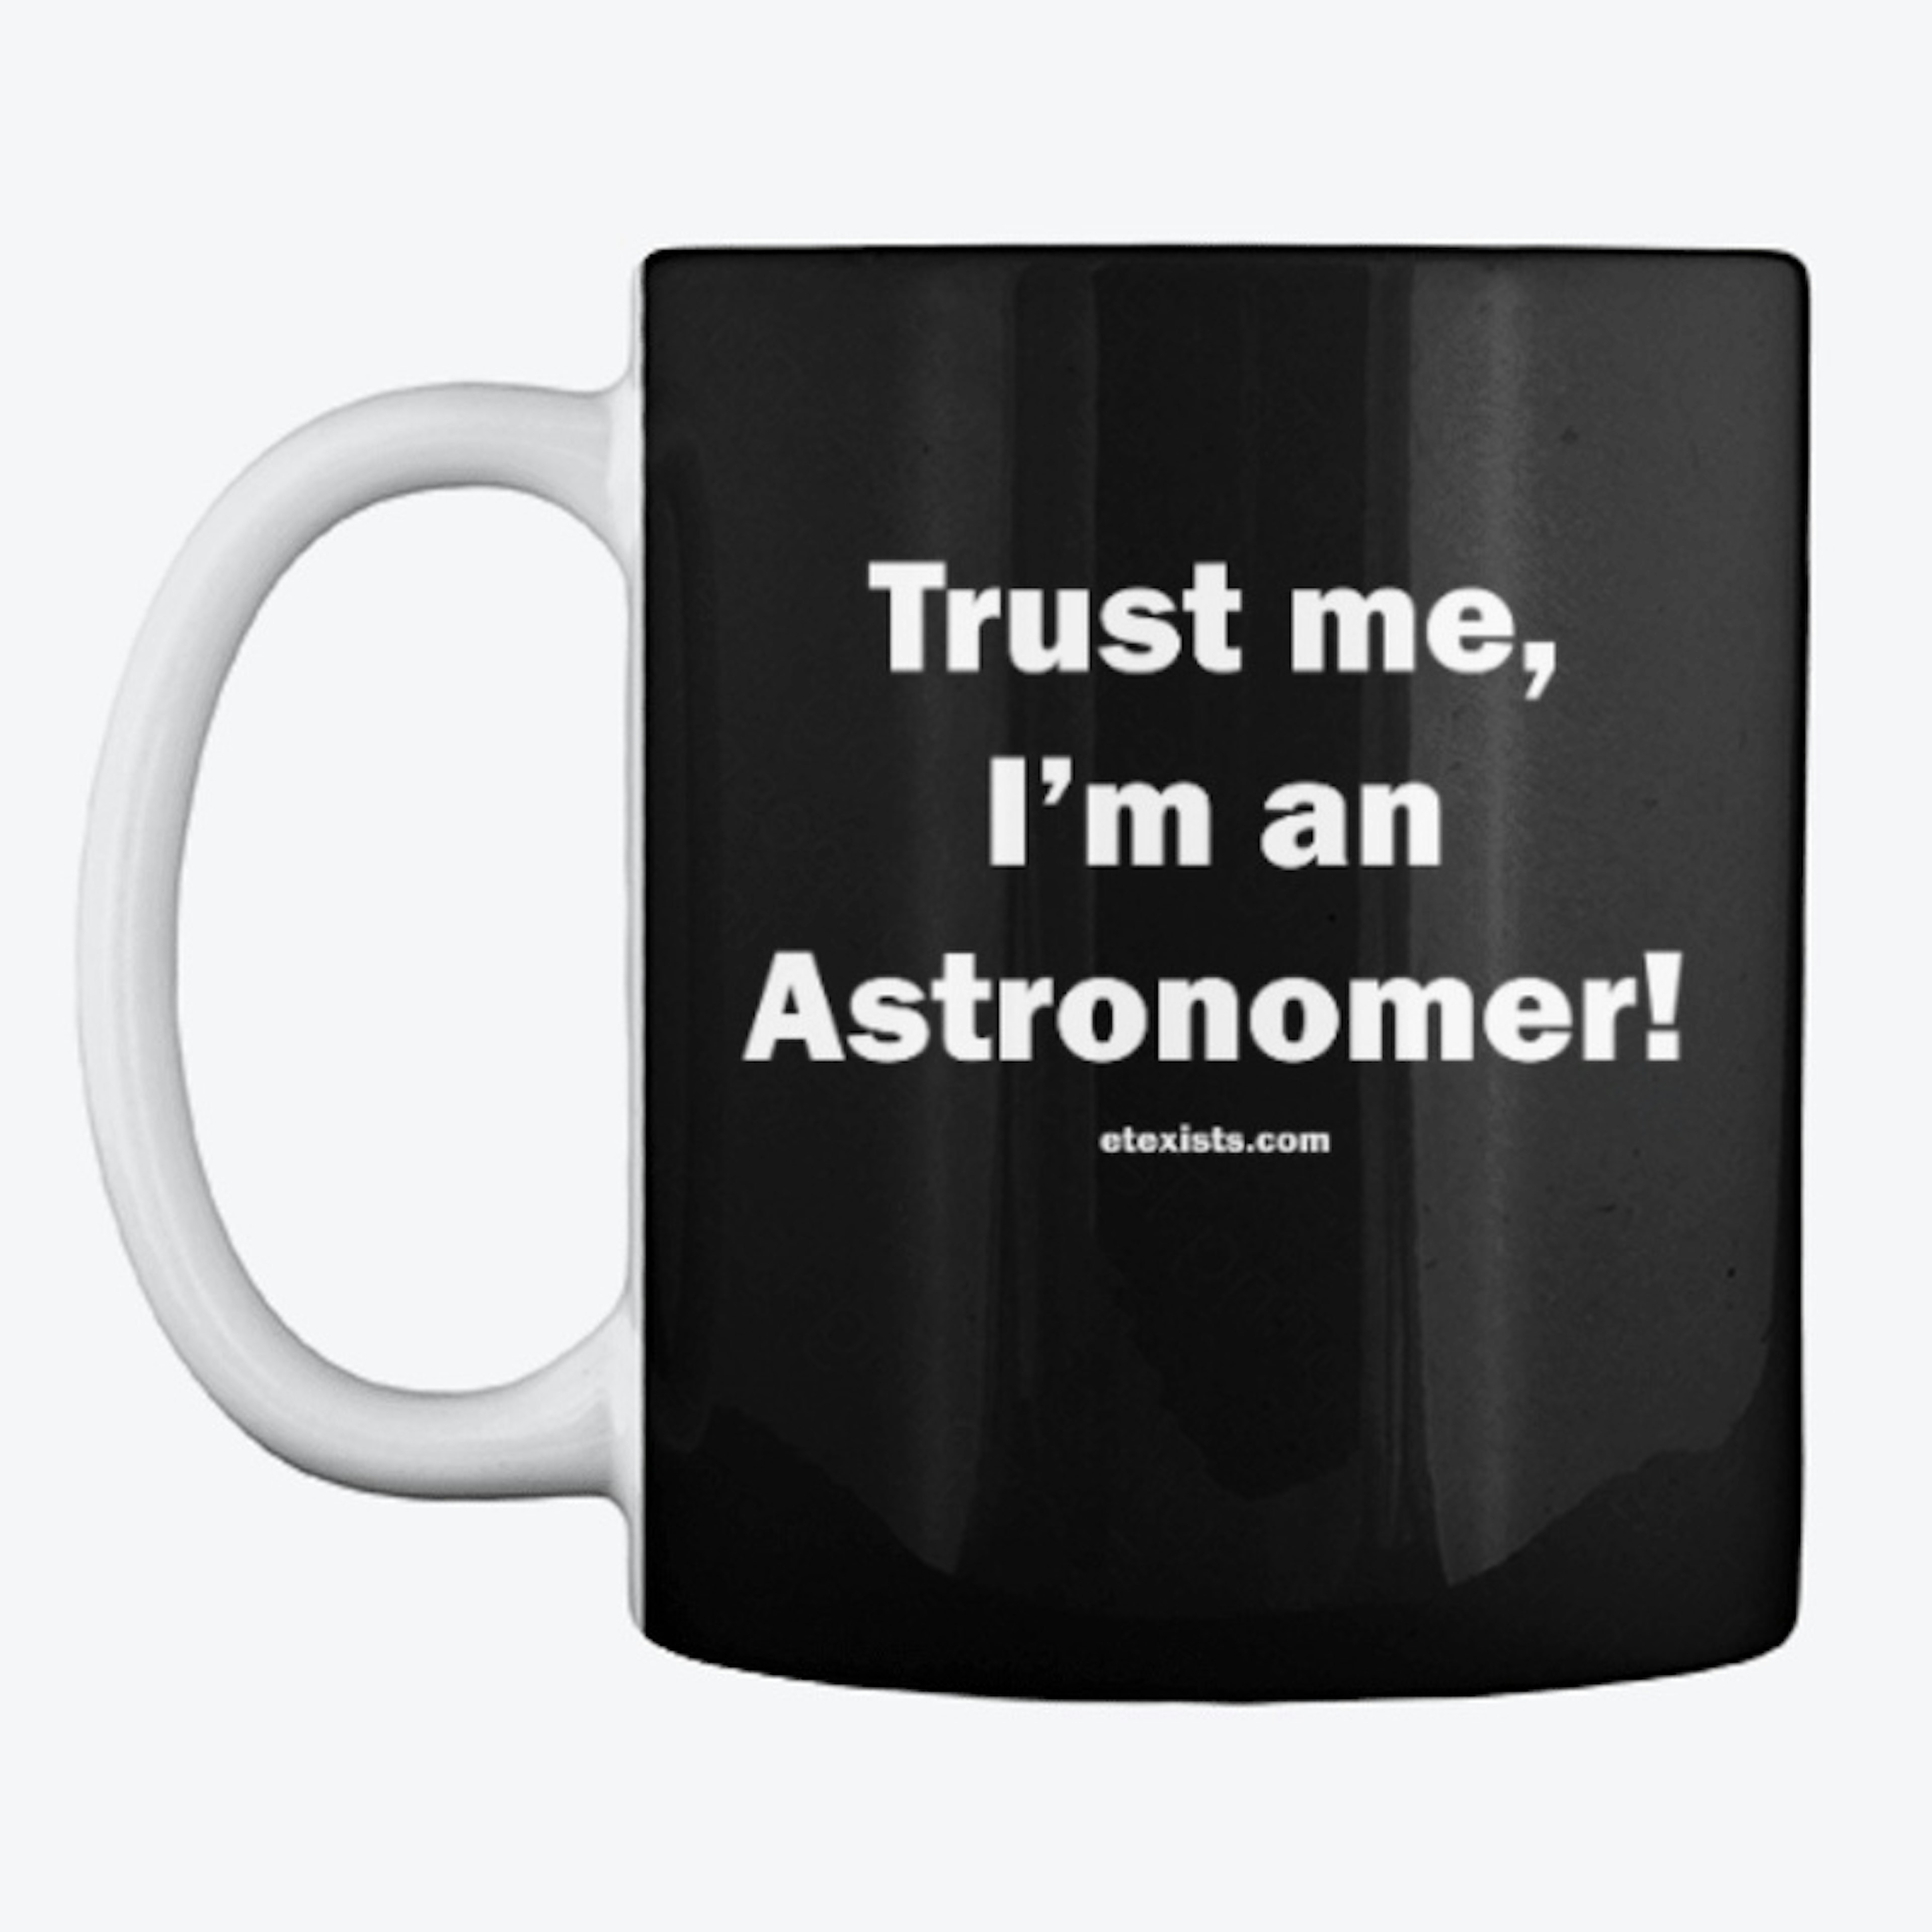 Trust Me, I'm an Astronomer!